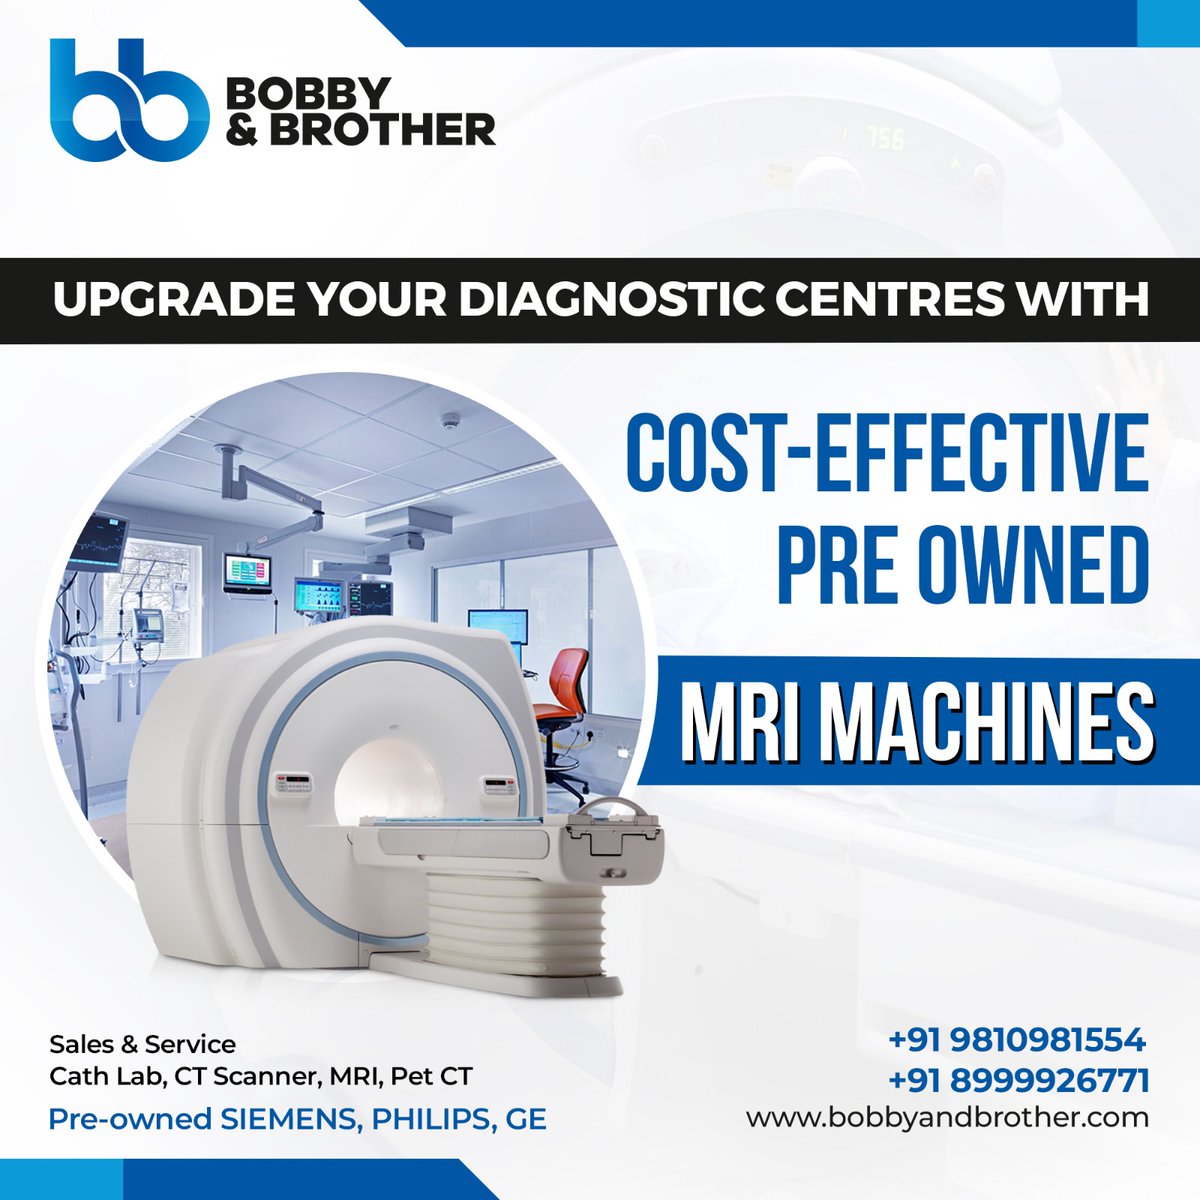 Upgrade your diagnostic center with Pre-owned MRI machines. Enhance your services and save big!  

Follow us : @BobbyandBrother  

#BobbyAndBrother #RefurbishedEquipment #PreOwnedMri #MriMachine #Mri #HealthCare #MedicalIndustry #Diagnostics #MedicalImaging #India